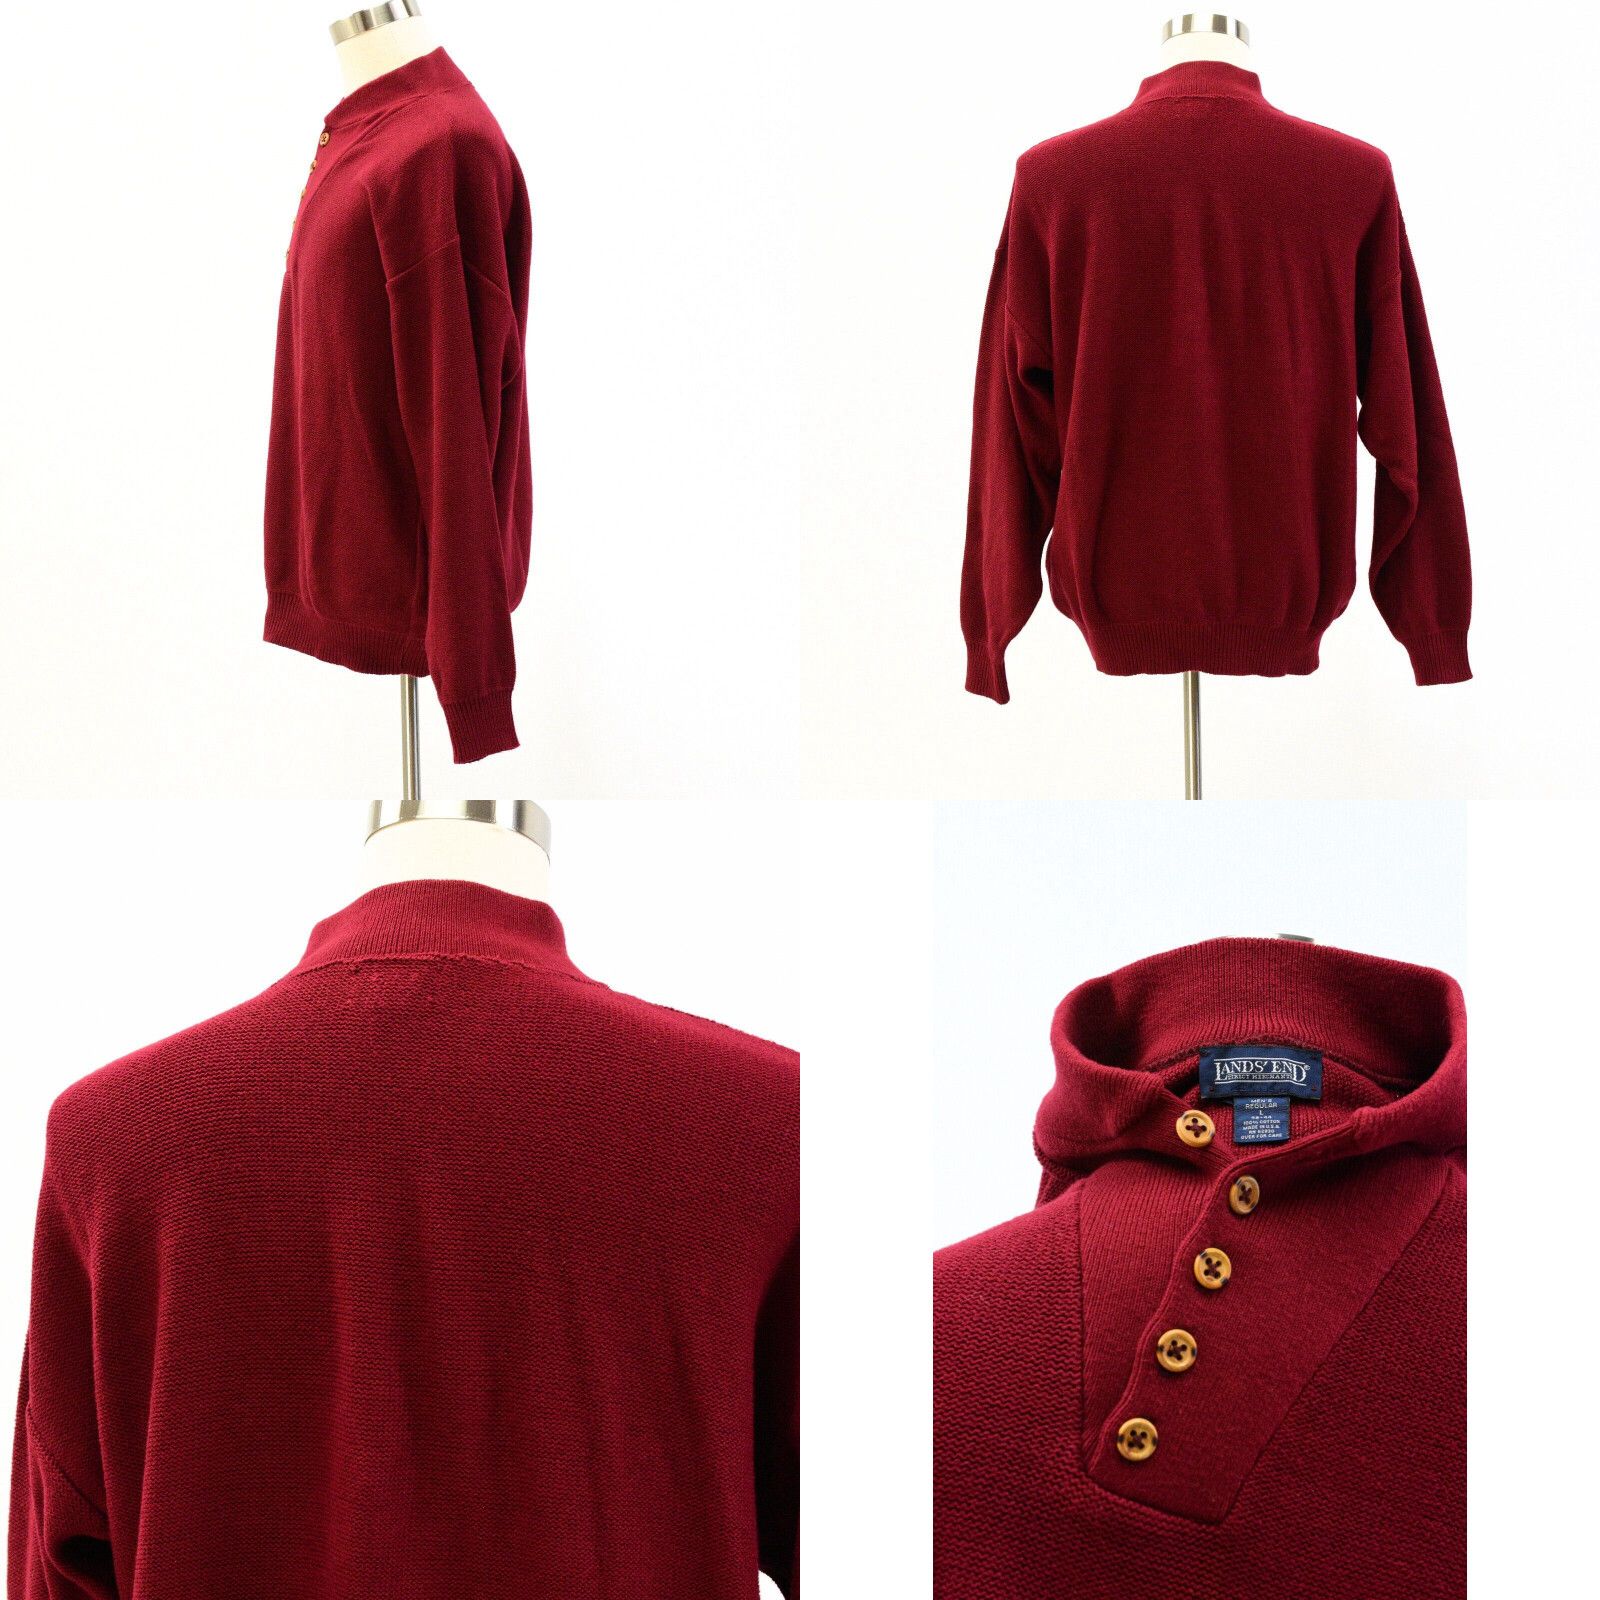 Vintage 90s Vintage Mens L Brick Red Lands' End Henley Sweater Knit Cotton Relaxed Fit Size US L / EU 52-54 / 3 - 4 Preview